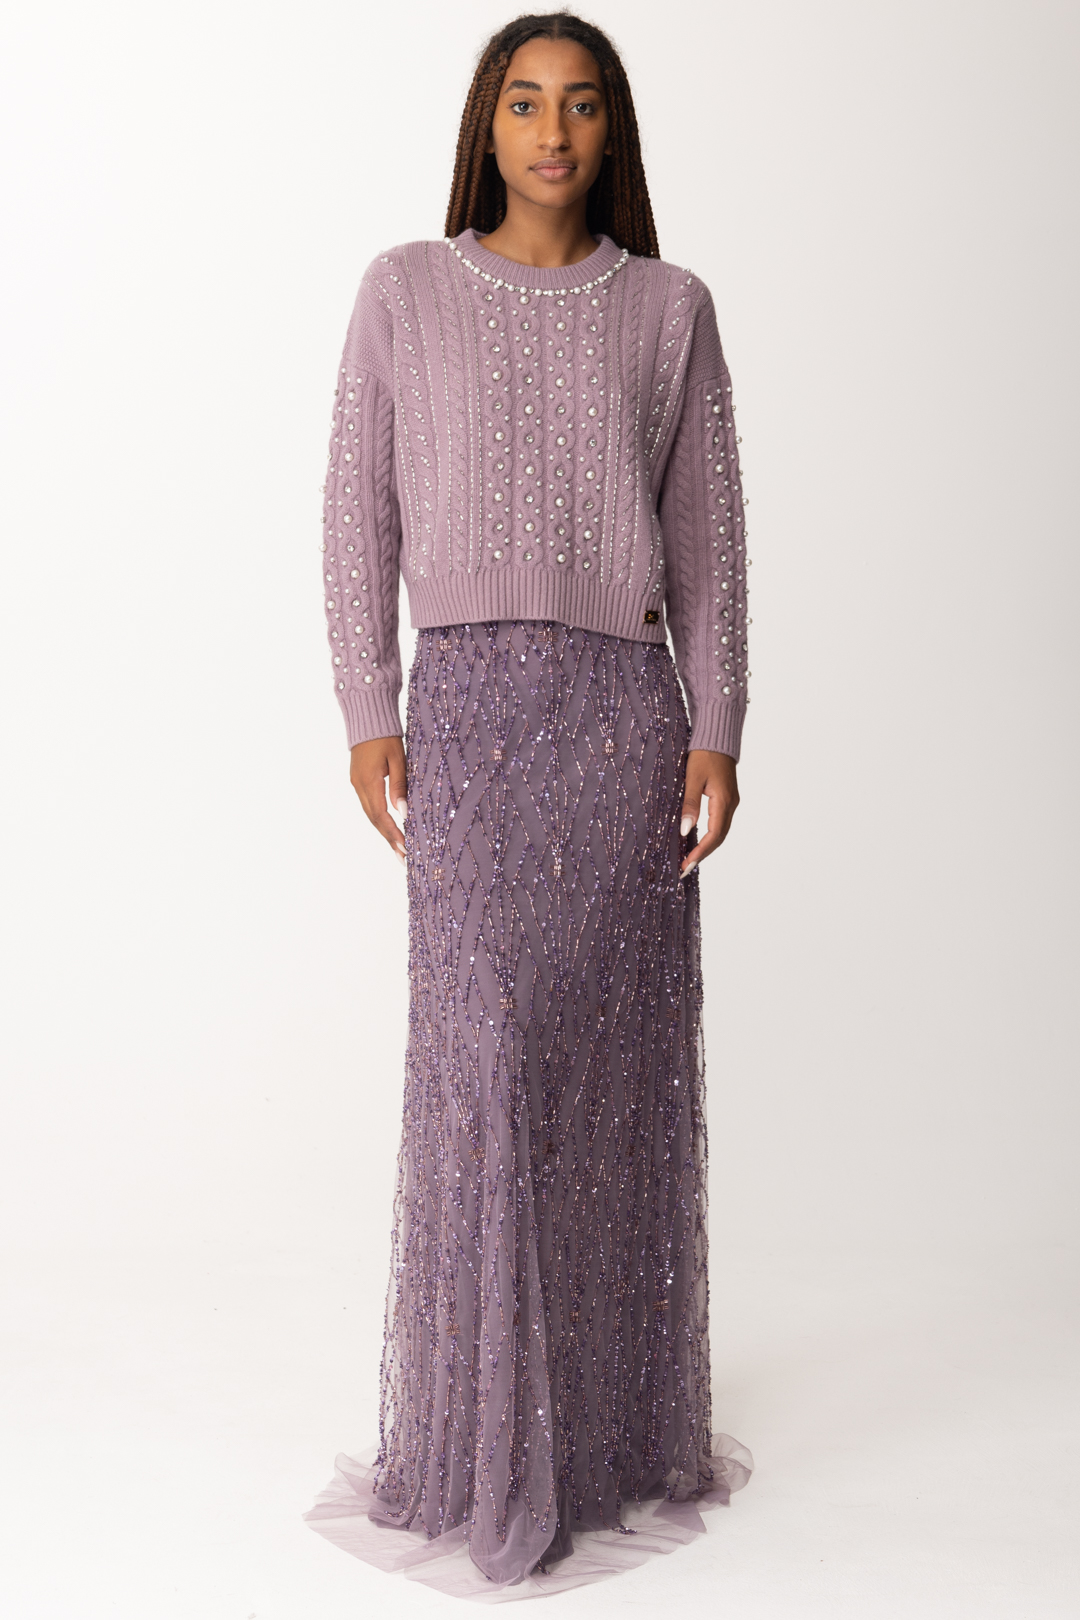 Podgląd: Elisabetta Franchi Wełniany sweter z haftem z pereł i kryształków CANDY VIOLET